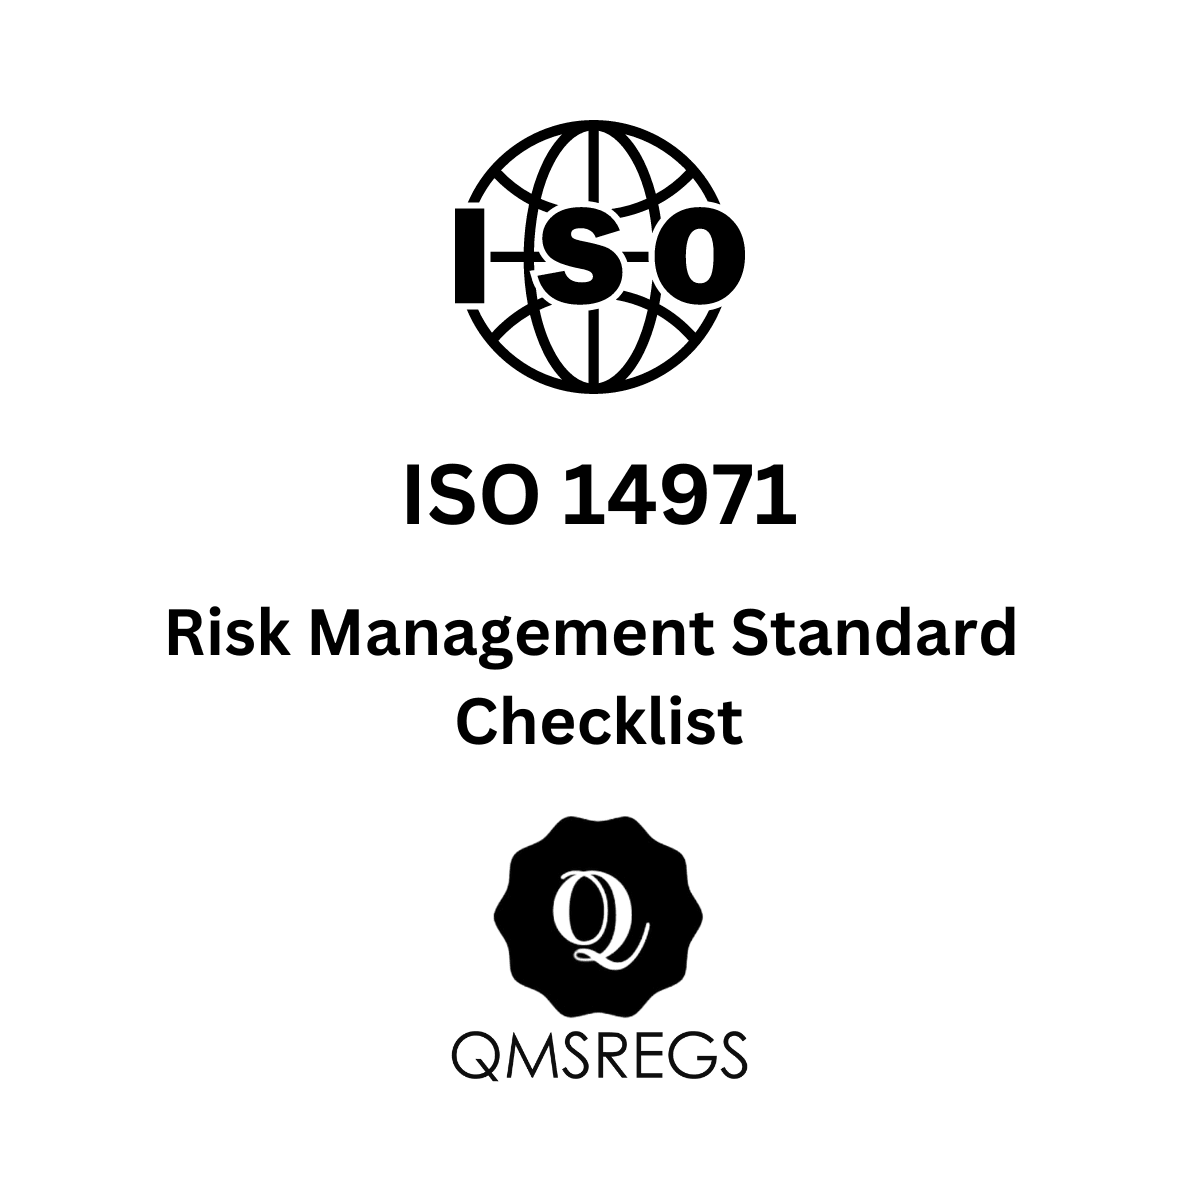 ISO 14971 Risk Management Standard Checklist